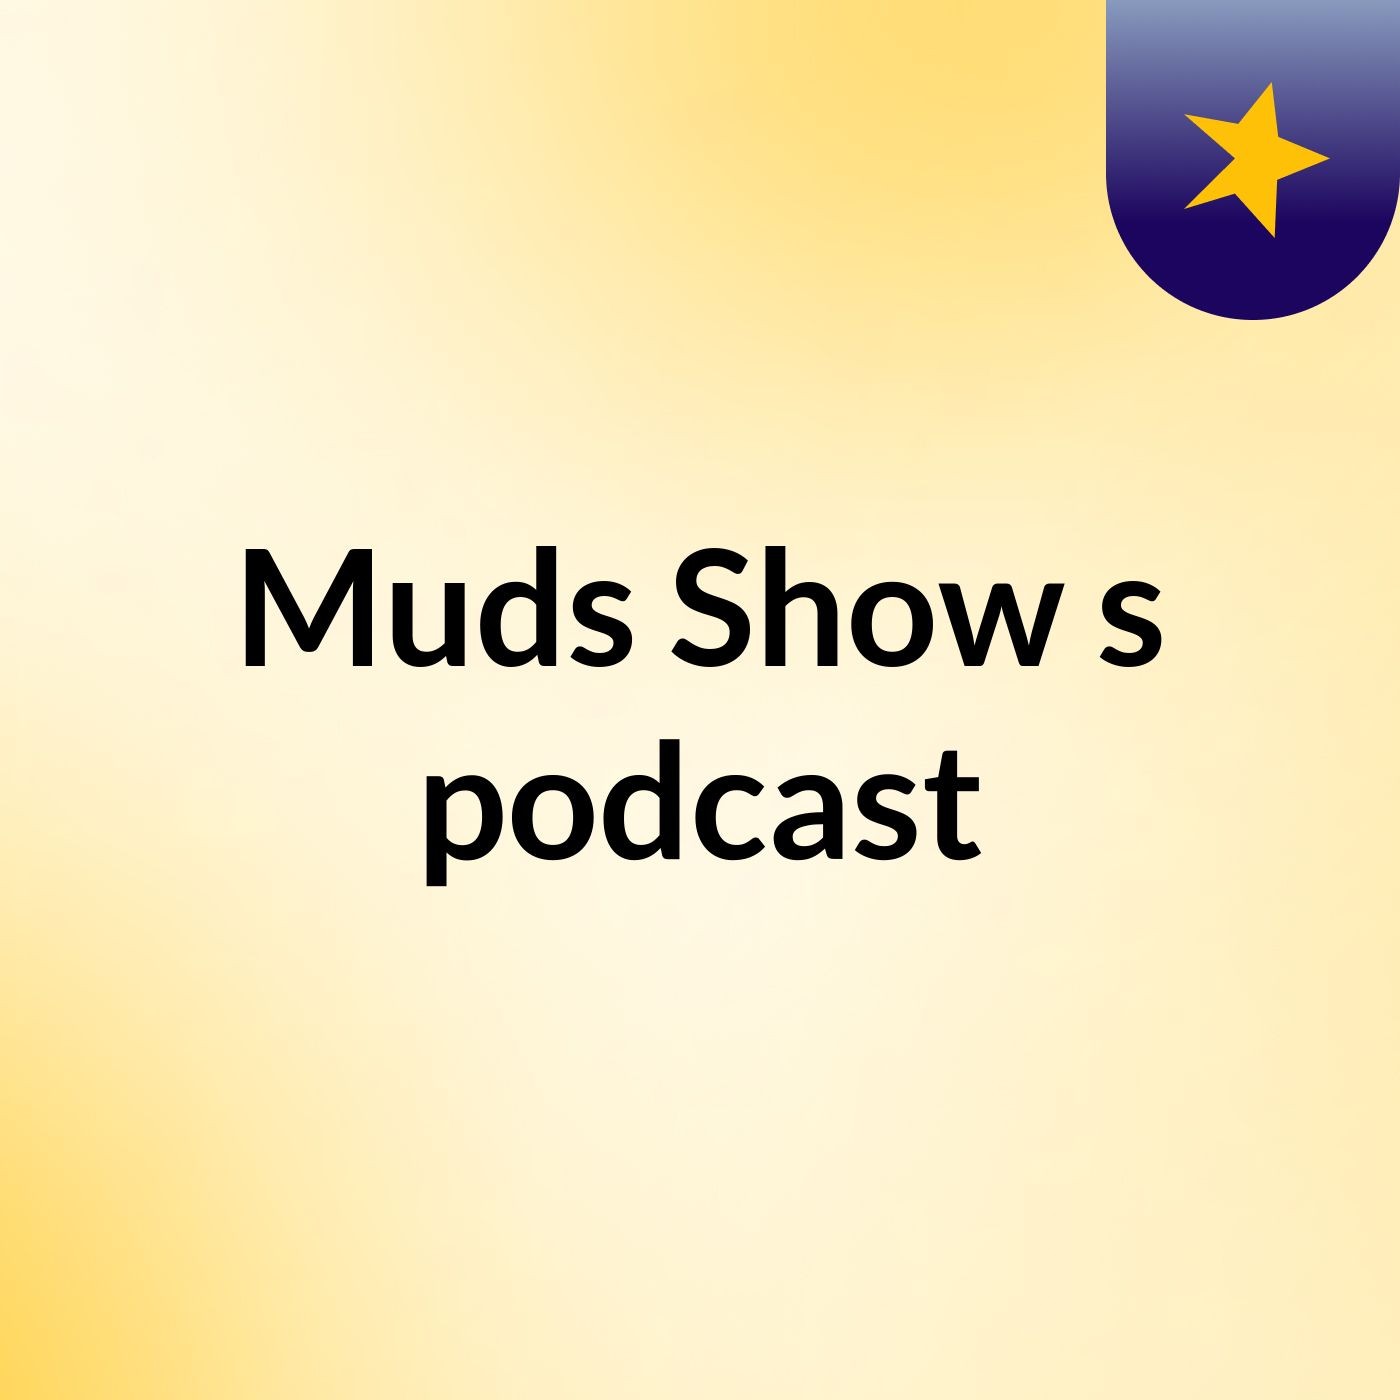 Muds Show's podcast